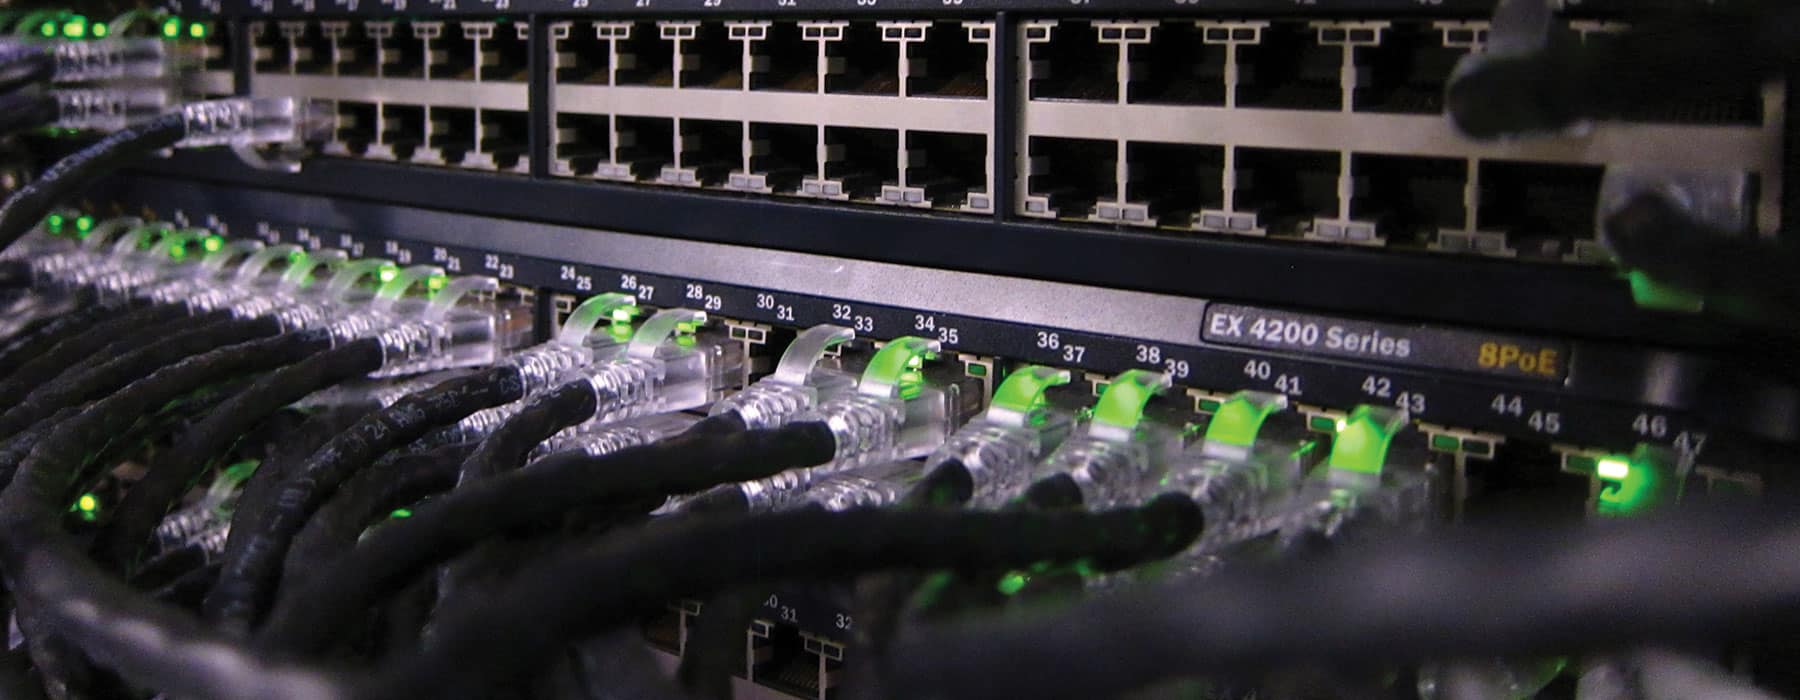 Power over Ethernet, dell-avigilon servers, surveillance data storage